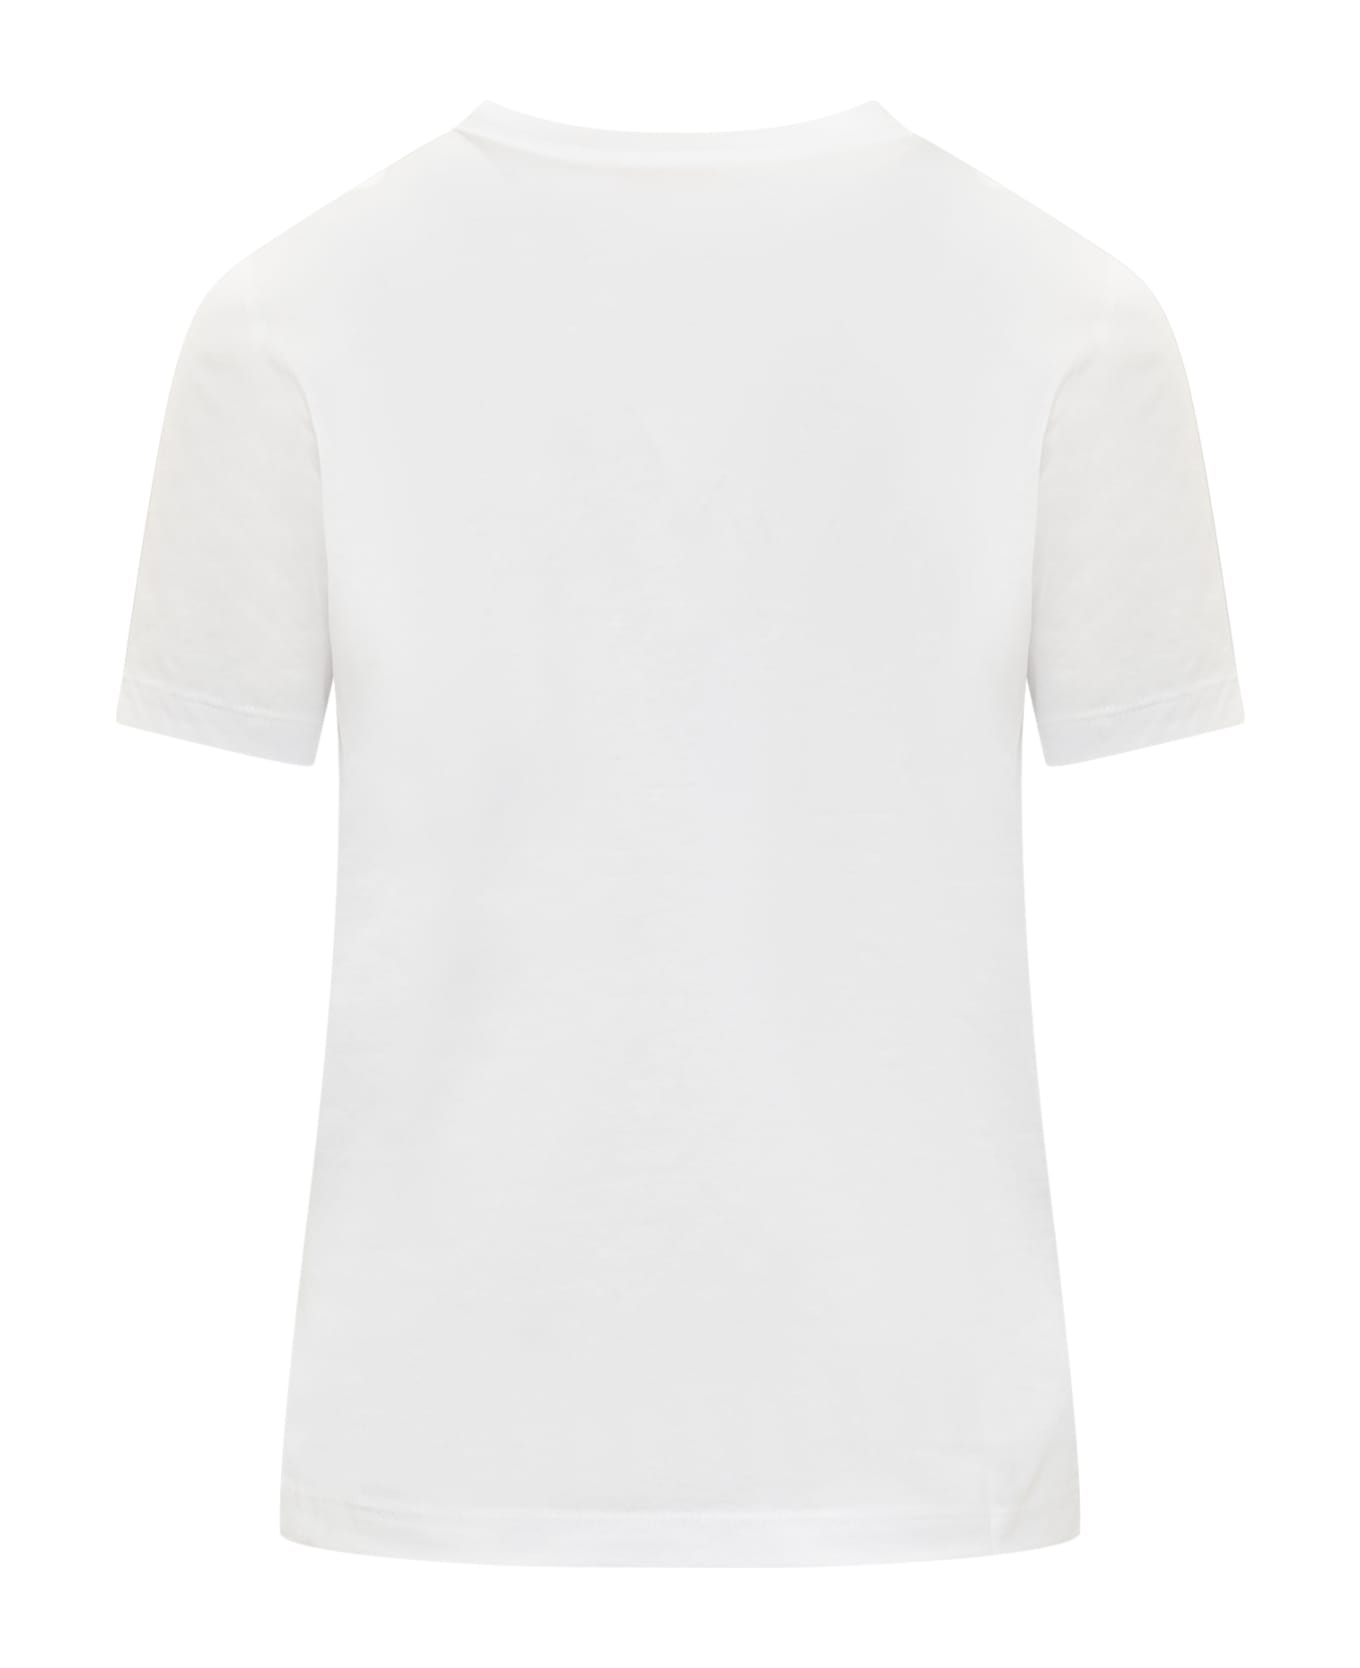 Diesel Logo T-shirt - BIANCO Tシャツ